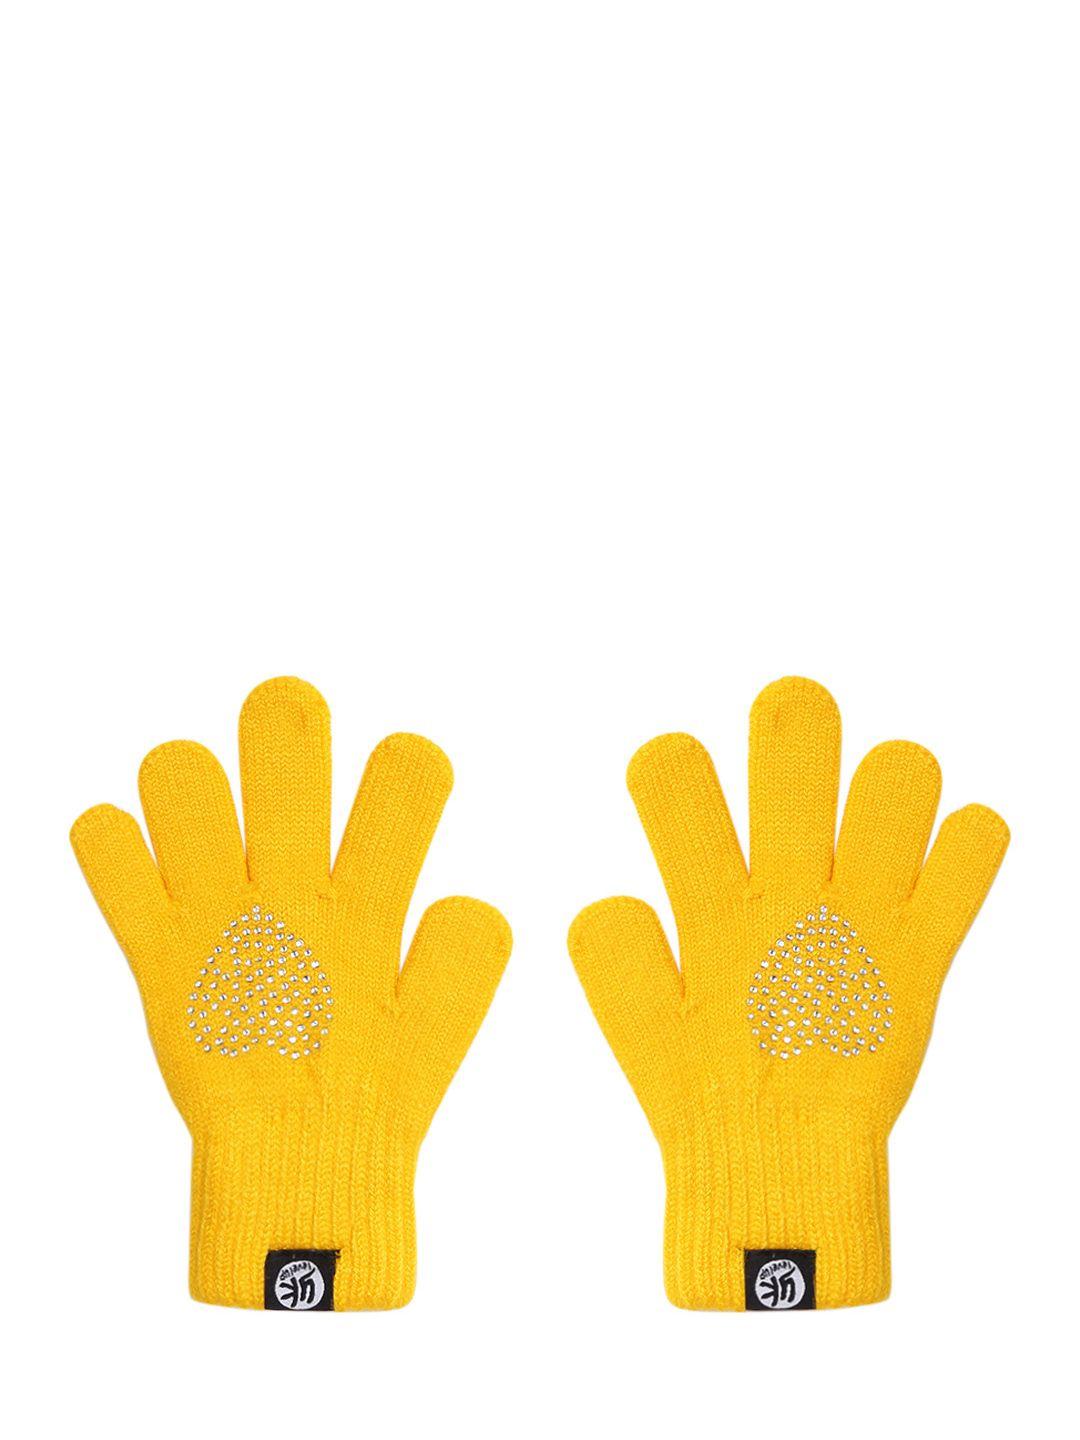 yk mustard yellow embellished hand gloves